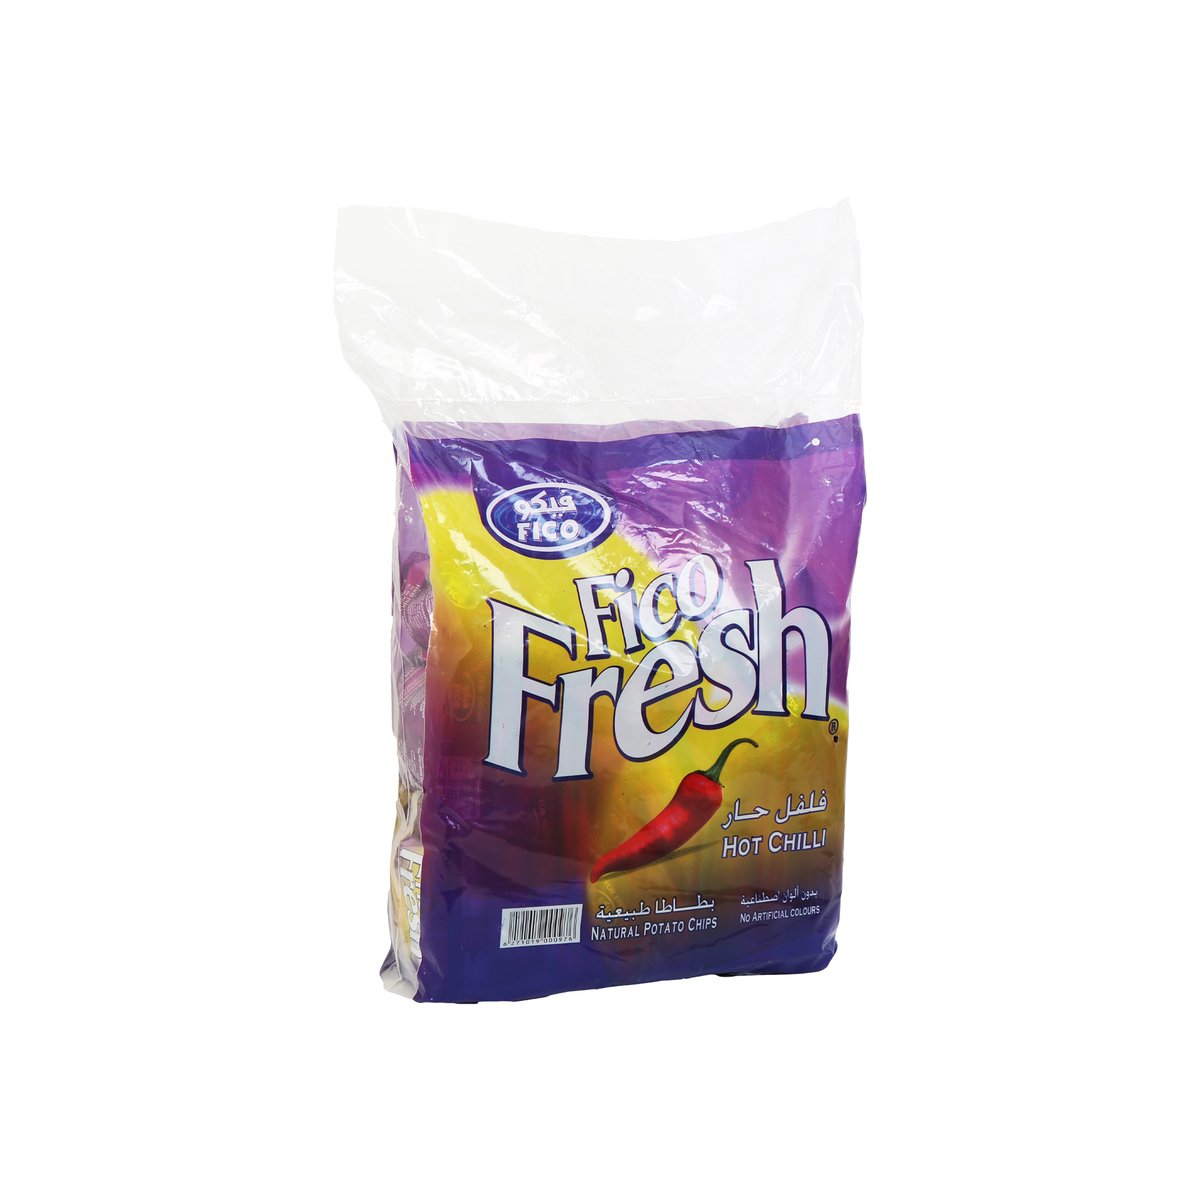 Fico Fresh Chips Hot Chilli 14g